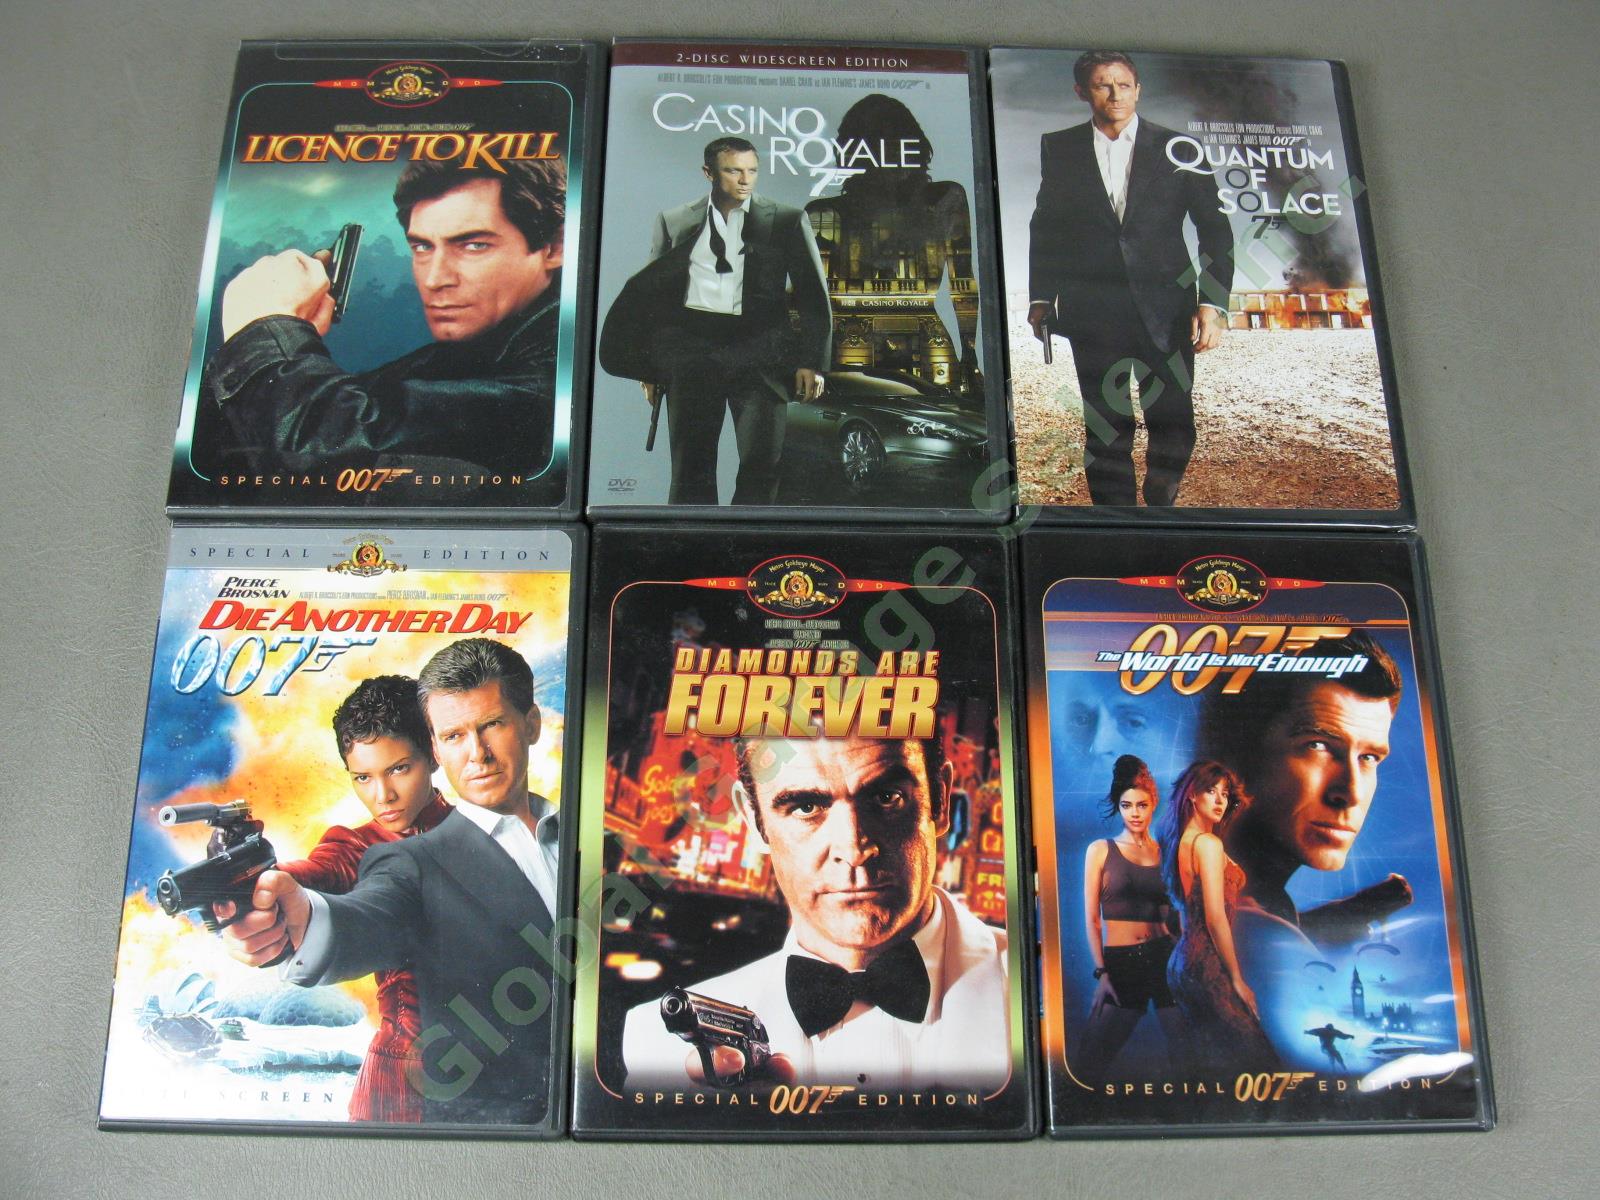 007 James Bond 46-DVD Collection Lot Ultimate Edition Box Sets Volume 1 2 3 4 NR 4